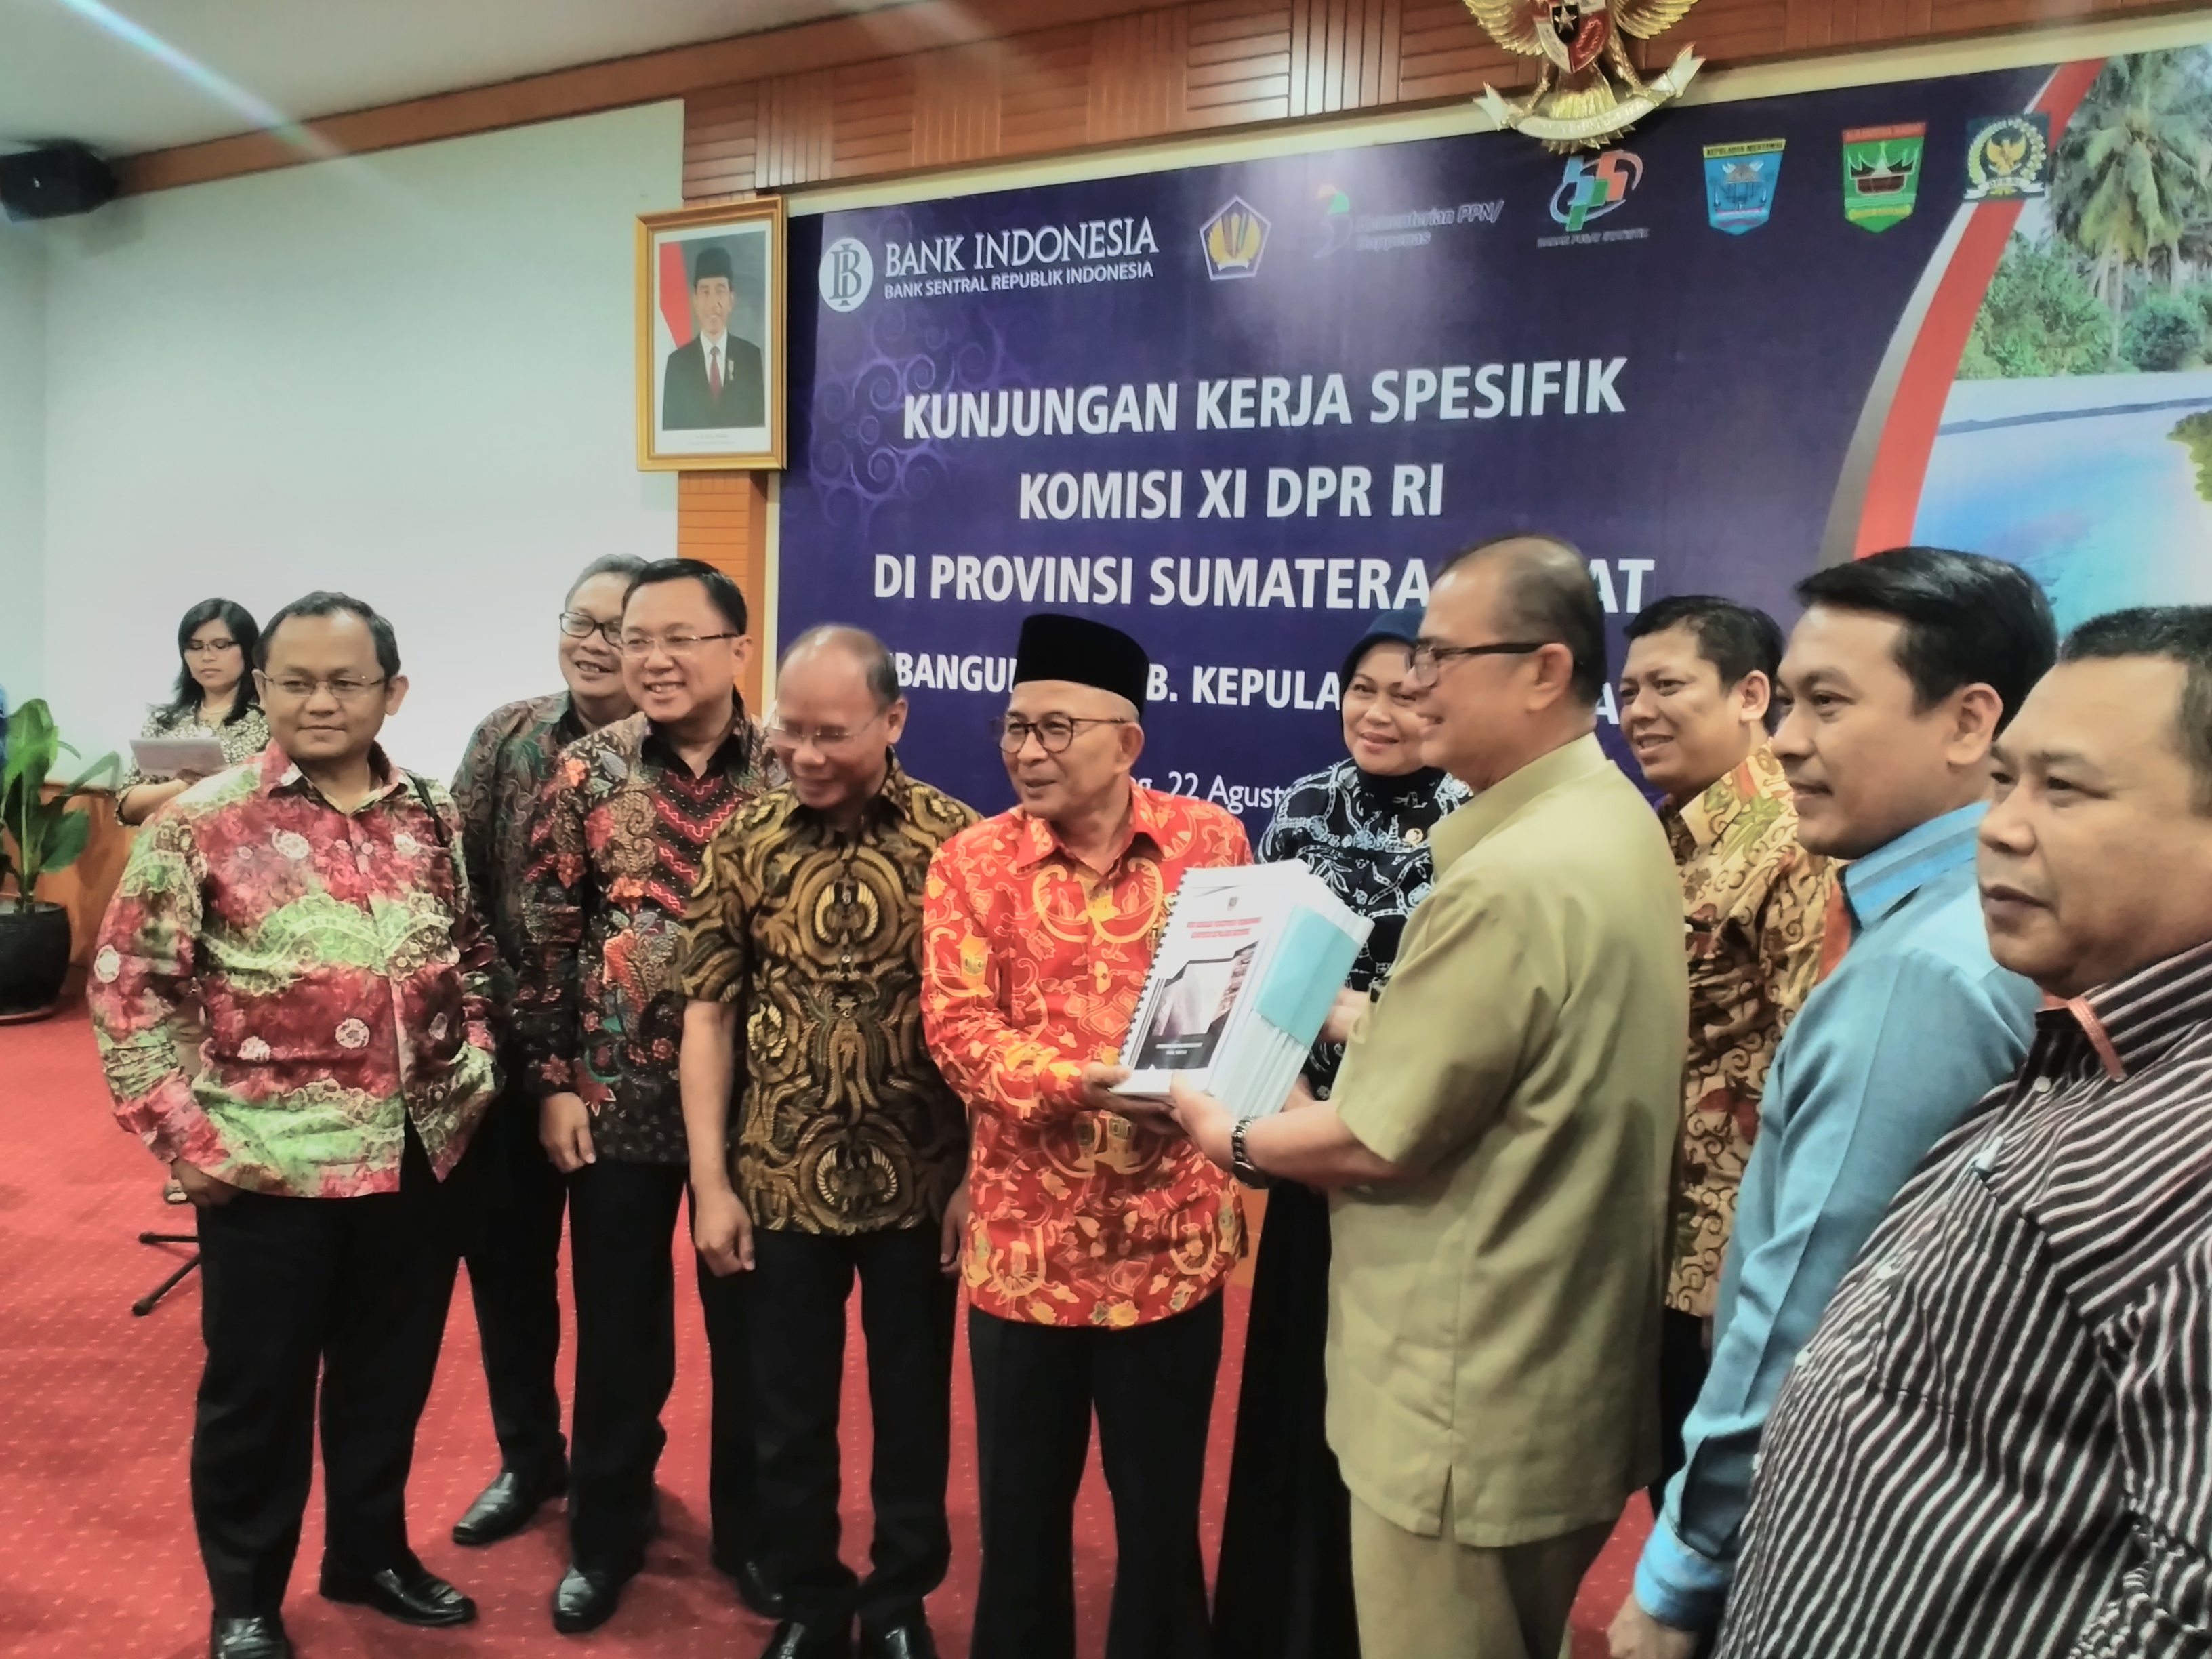 Kunjungan Kerja Komisi XI DPR RI Sumatera Barat